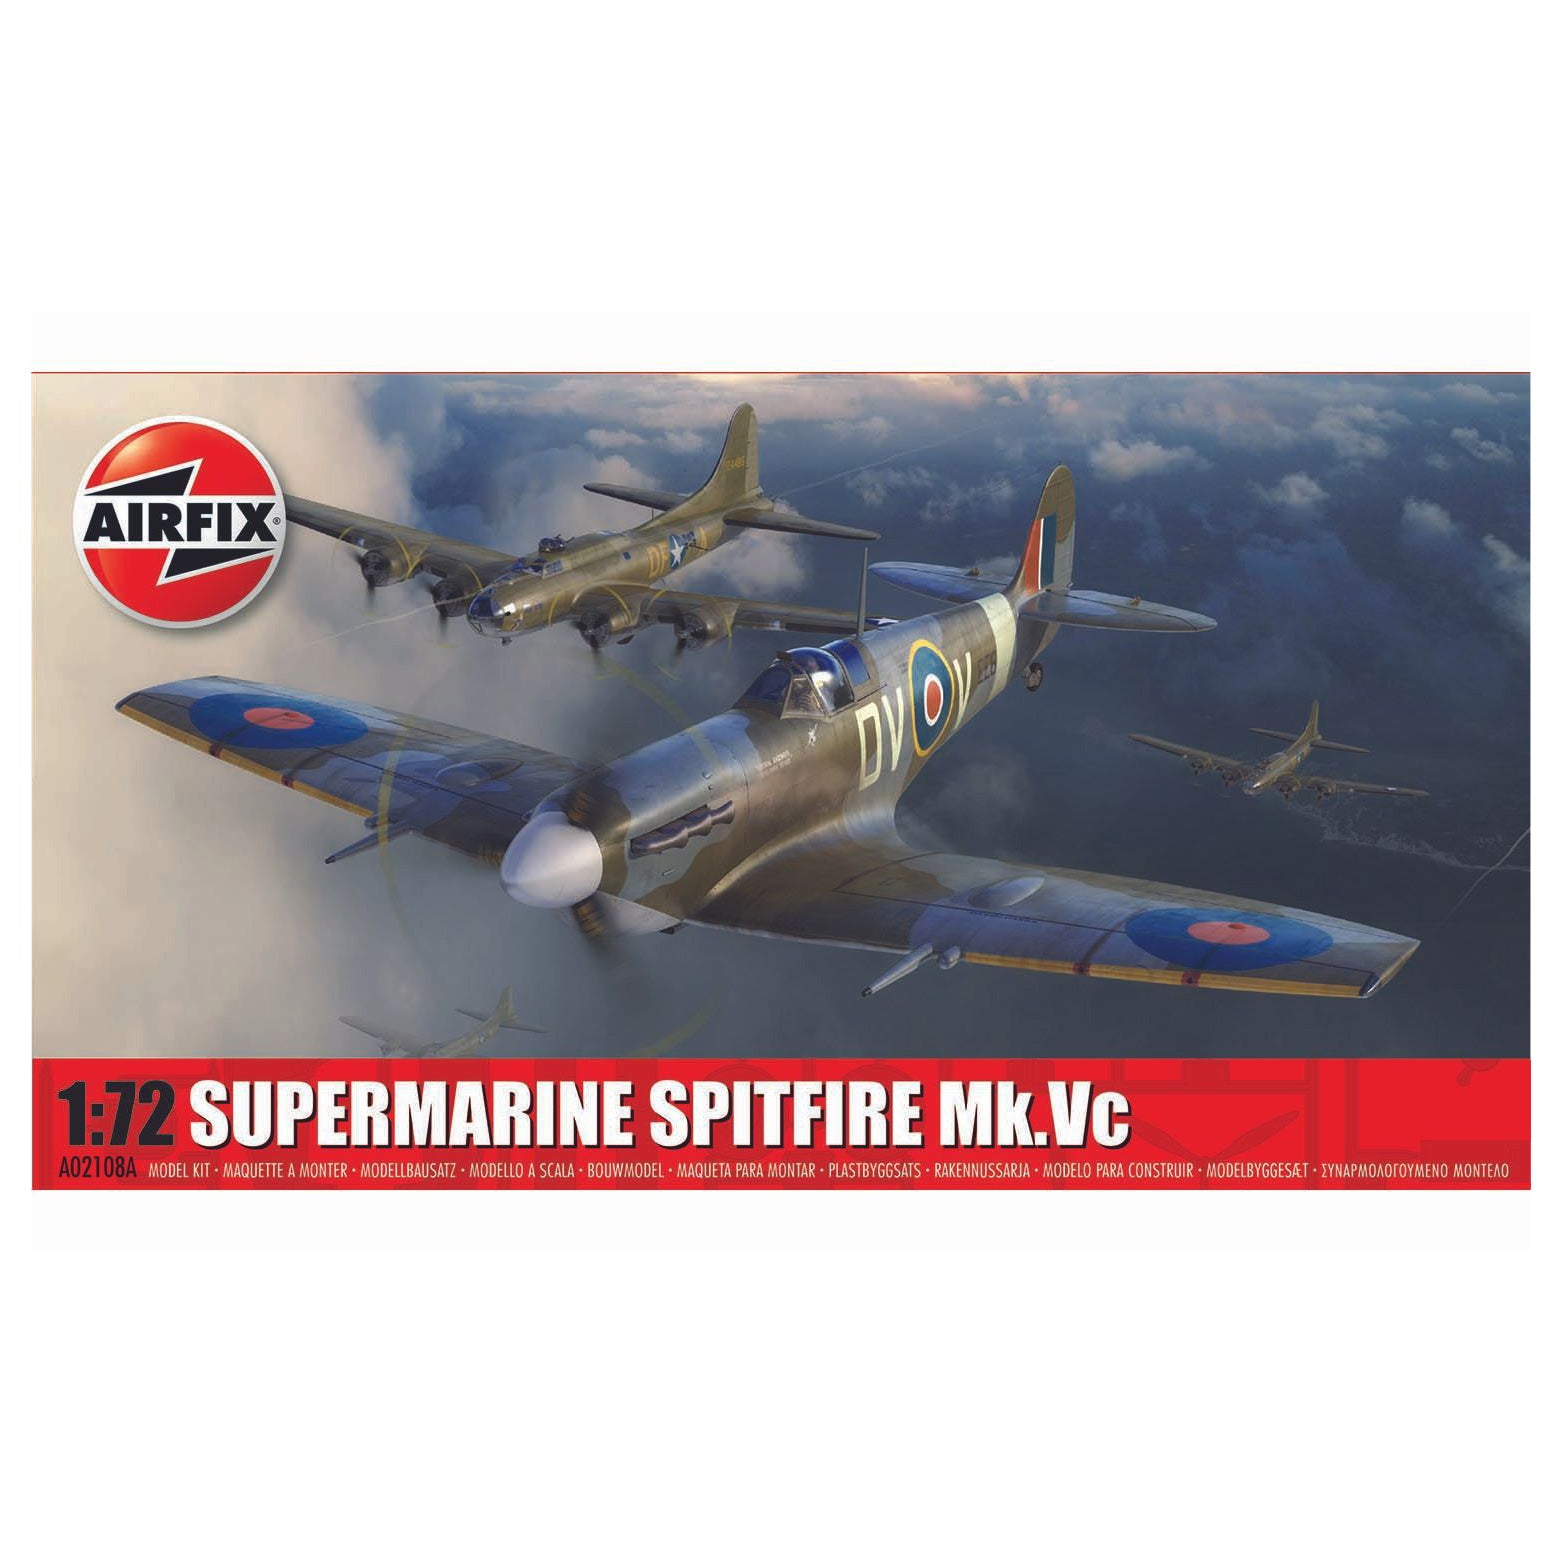 Airfix Supermarine Spitfire Mk Vc - Loaded Dice Barry Vale of Glamorgan CF64 3HD